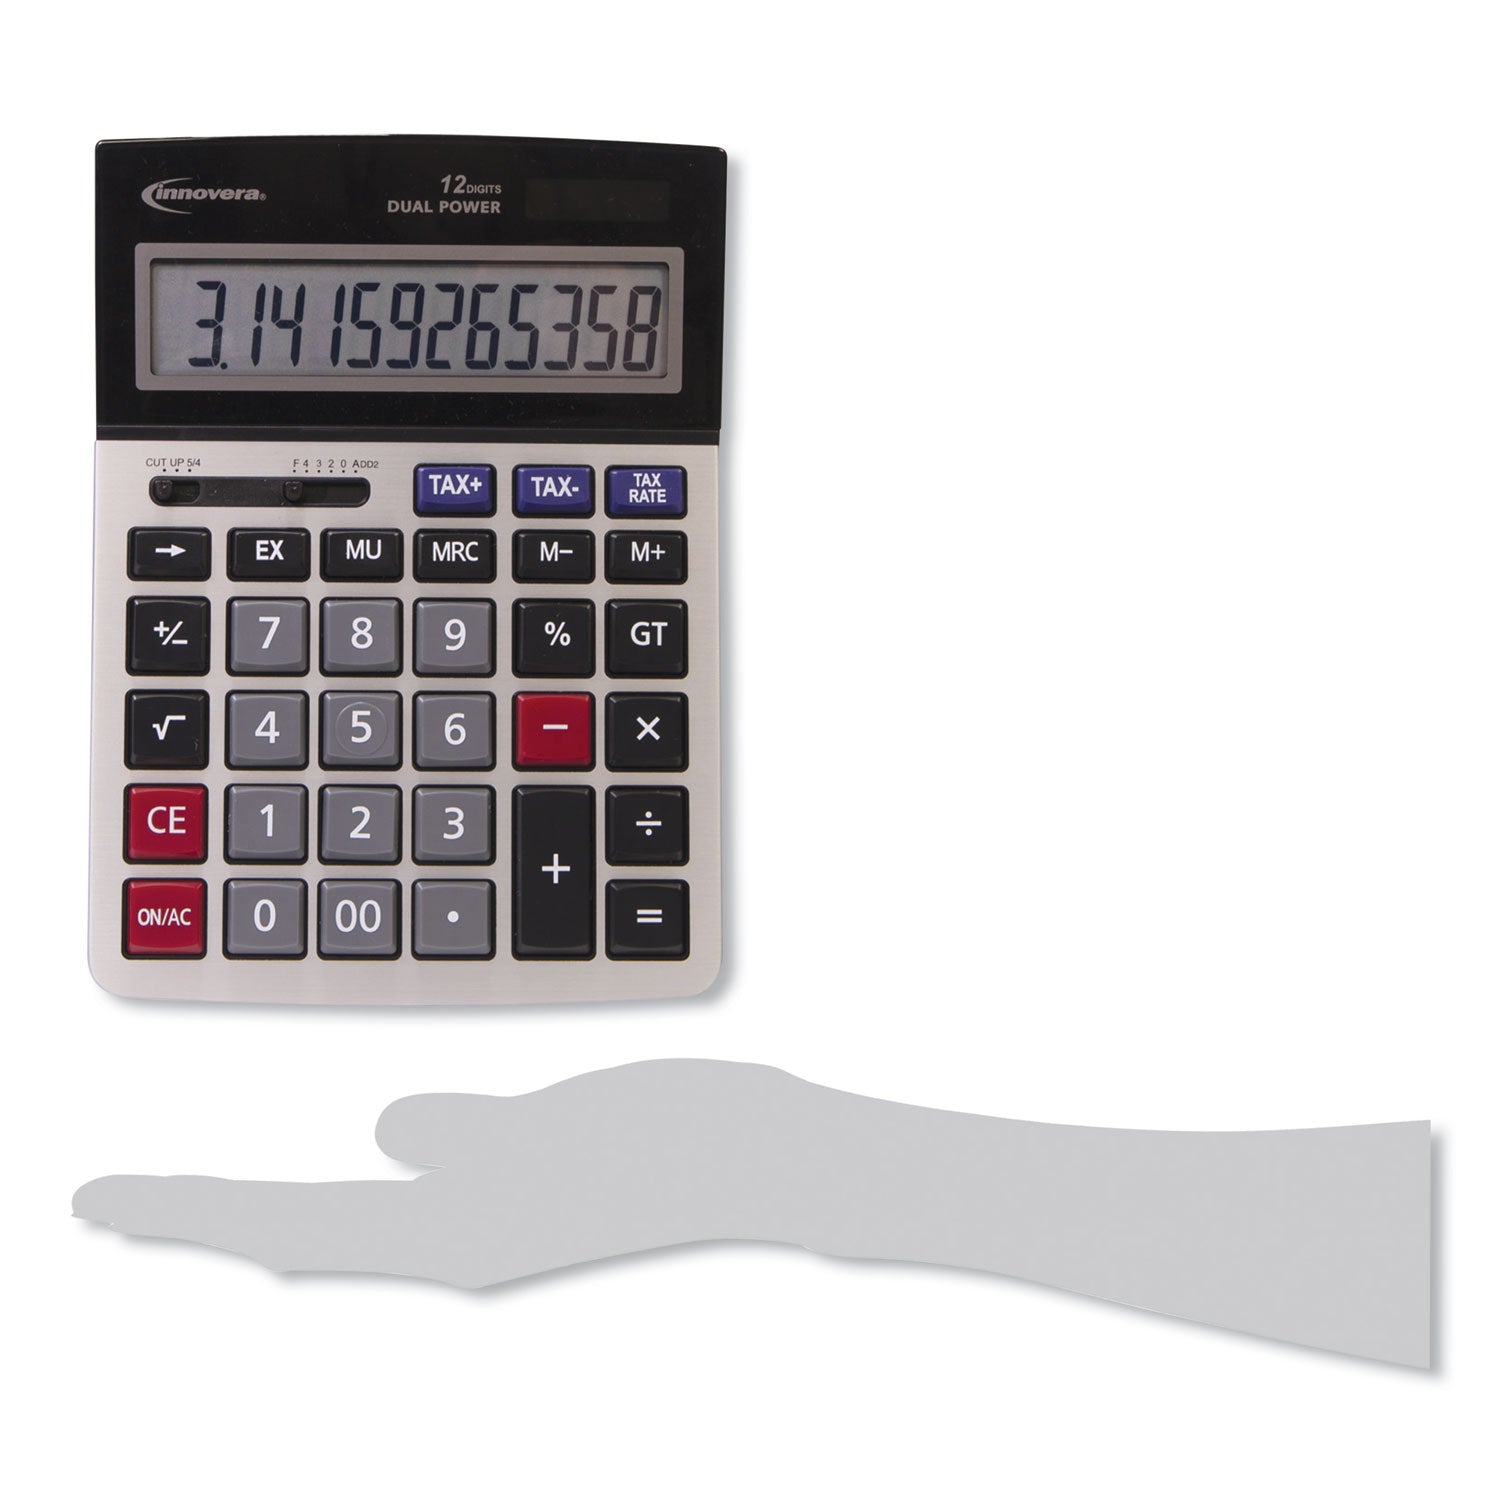 15975 Large Display Calculator, 12-Digit LCD - 